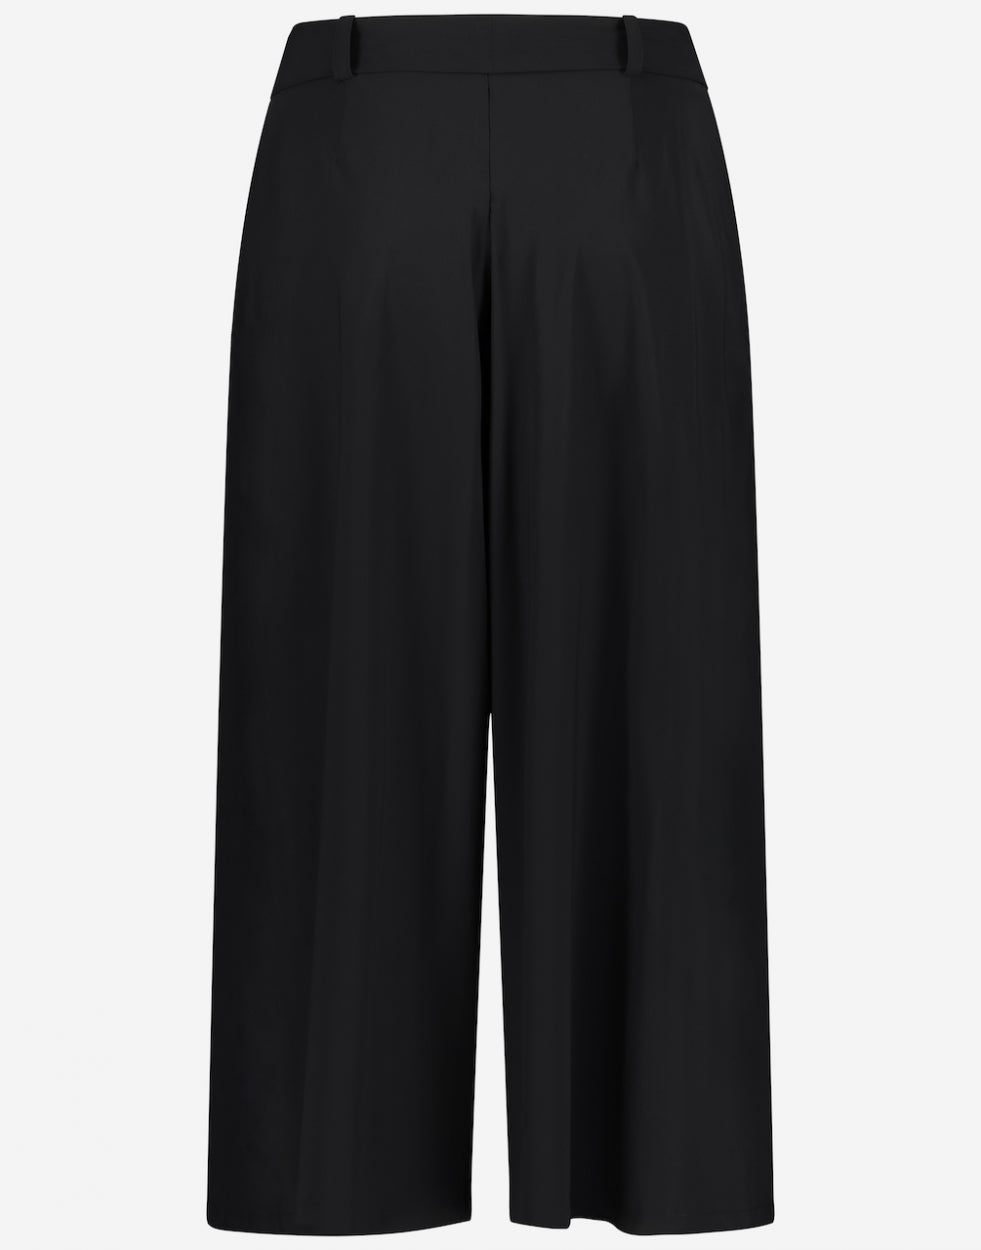 Pants Pascale Technical Jersey | Black